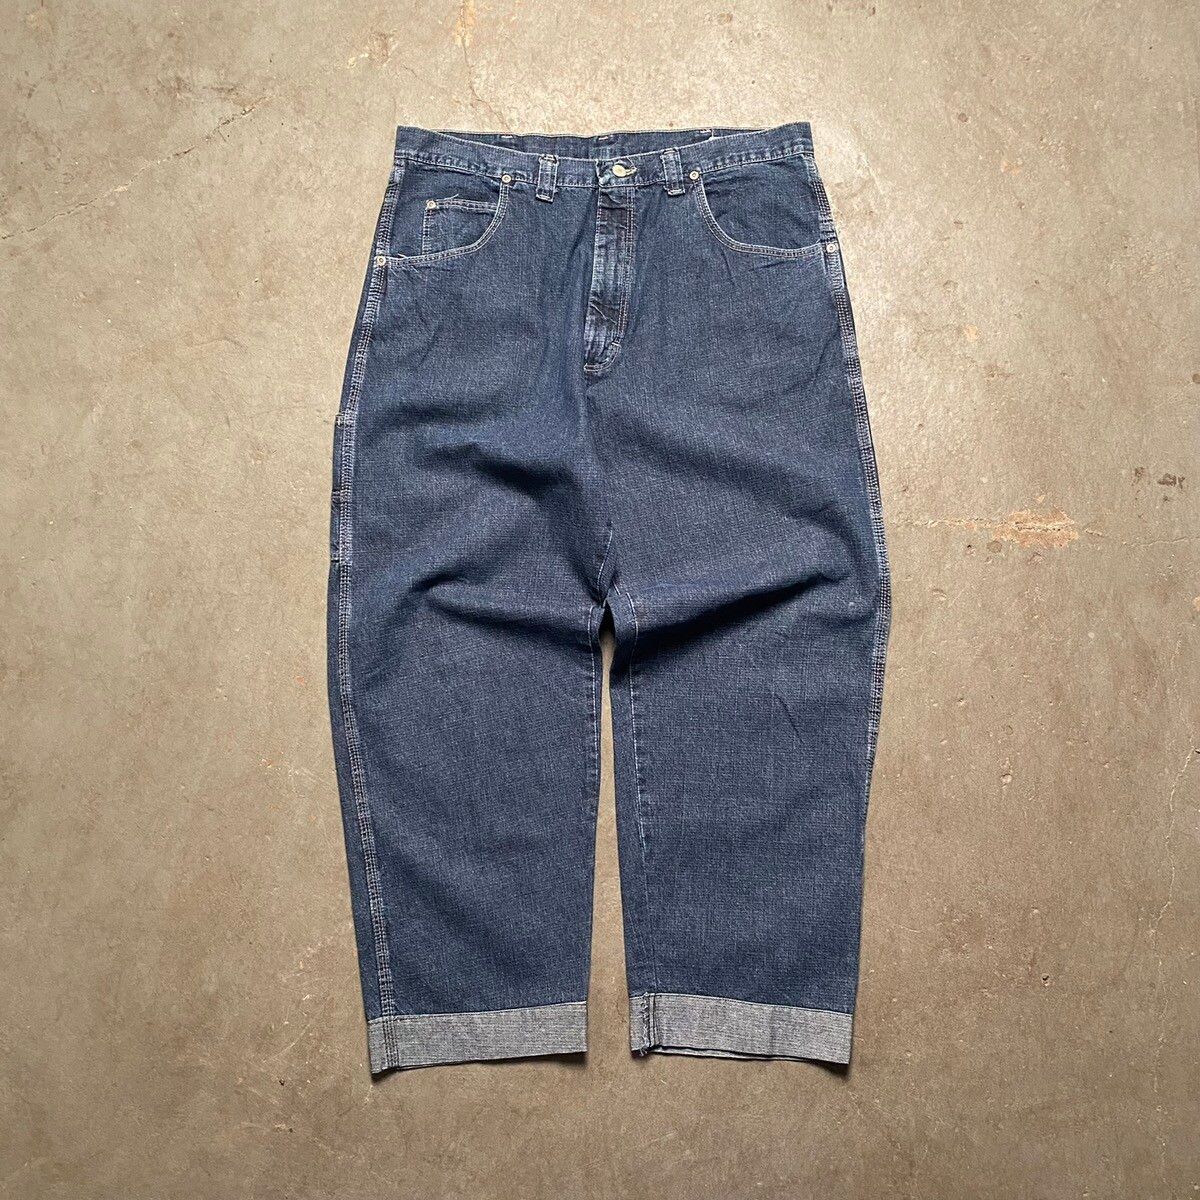 Vintage Vintage 90s Wrangler Baggy Carpenter Jeans Made in Usa Size US 36 / EU 52 - 2 Preview